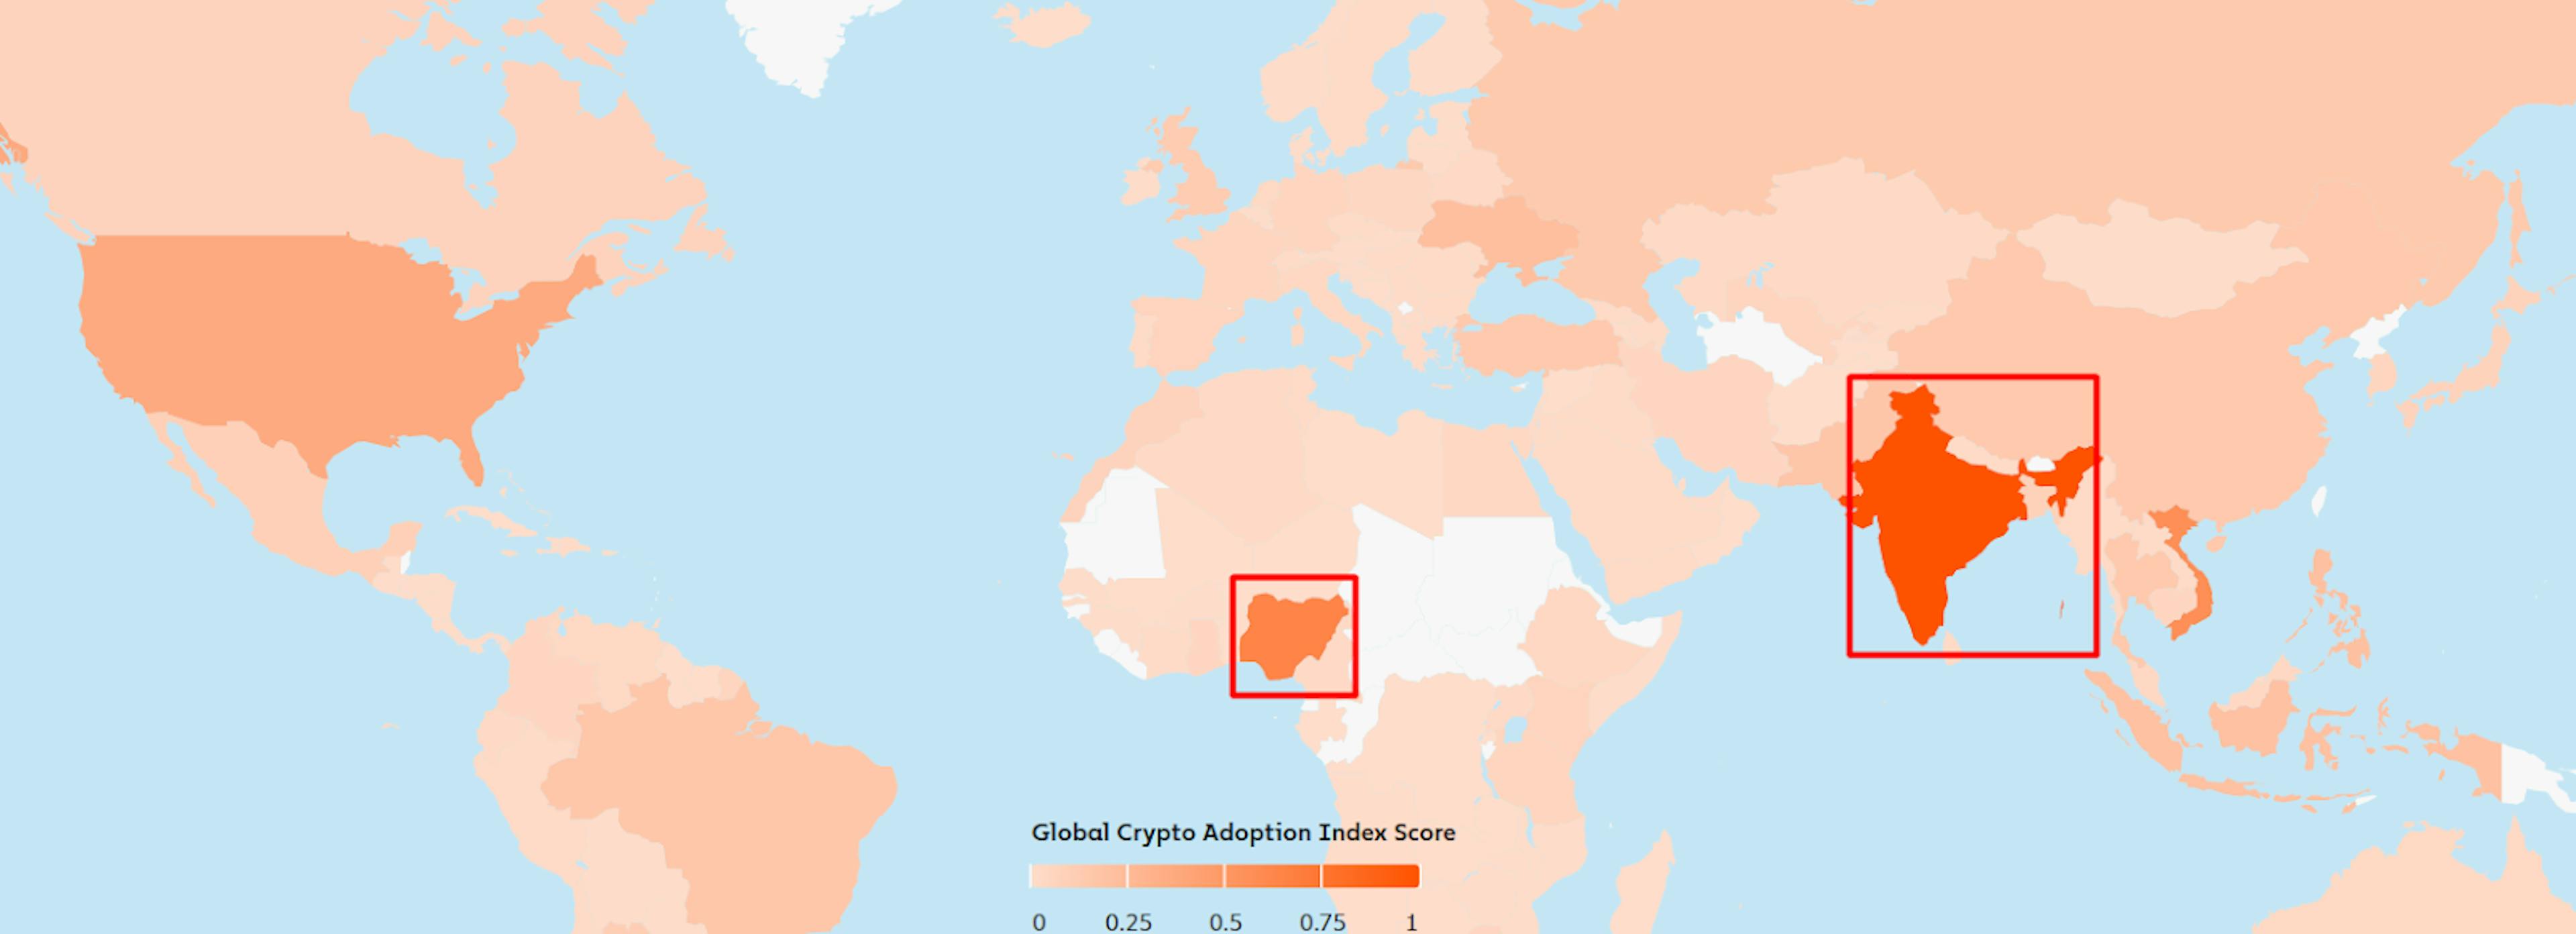 Source: https://www.chainalysis.com/blog/2023-global-crypto-adoption-index/#top20